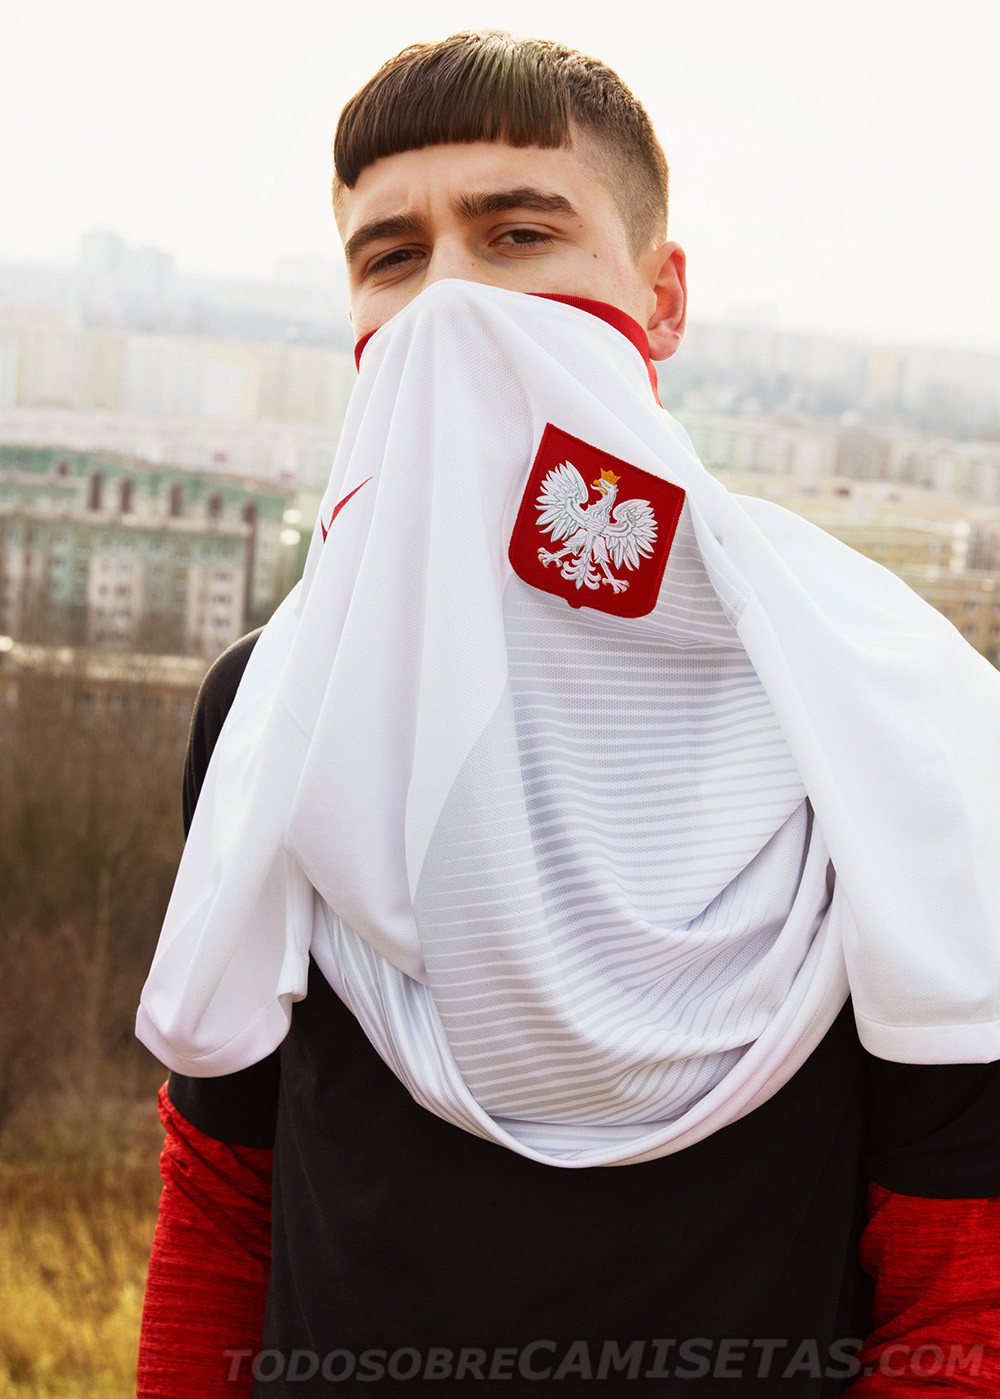 Poland 2018 World Cup Nike Kits